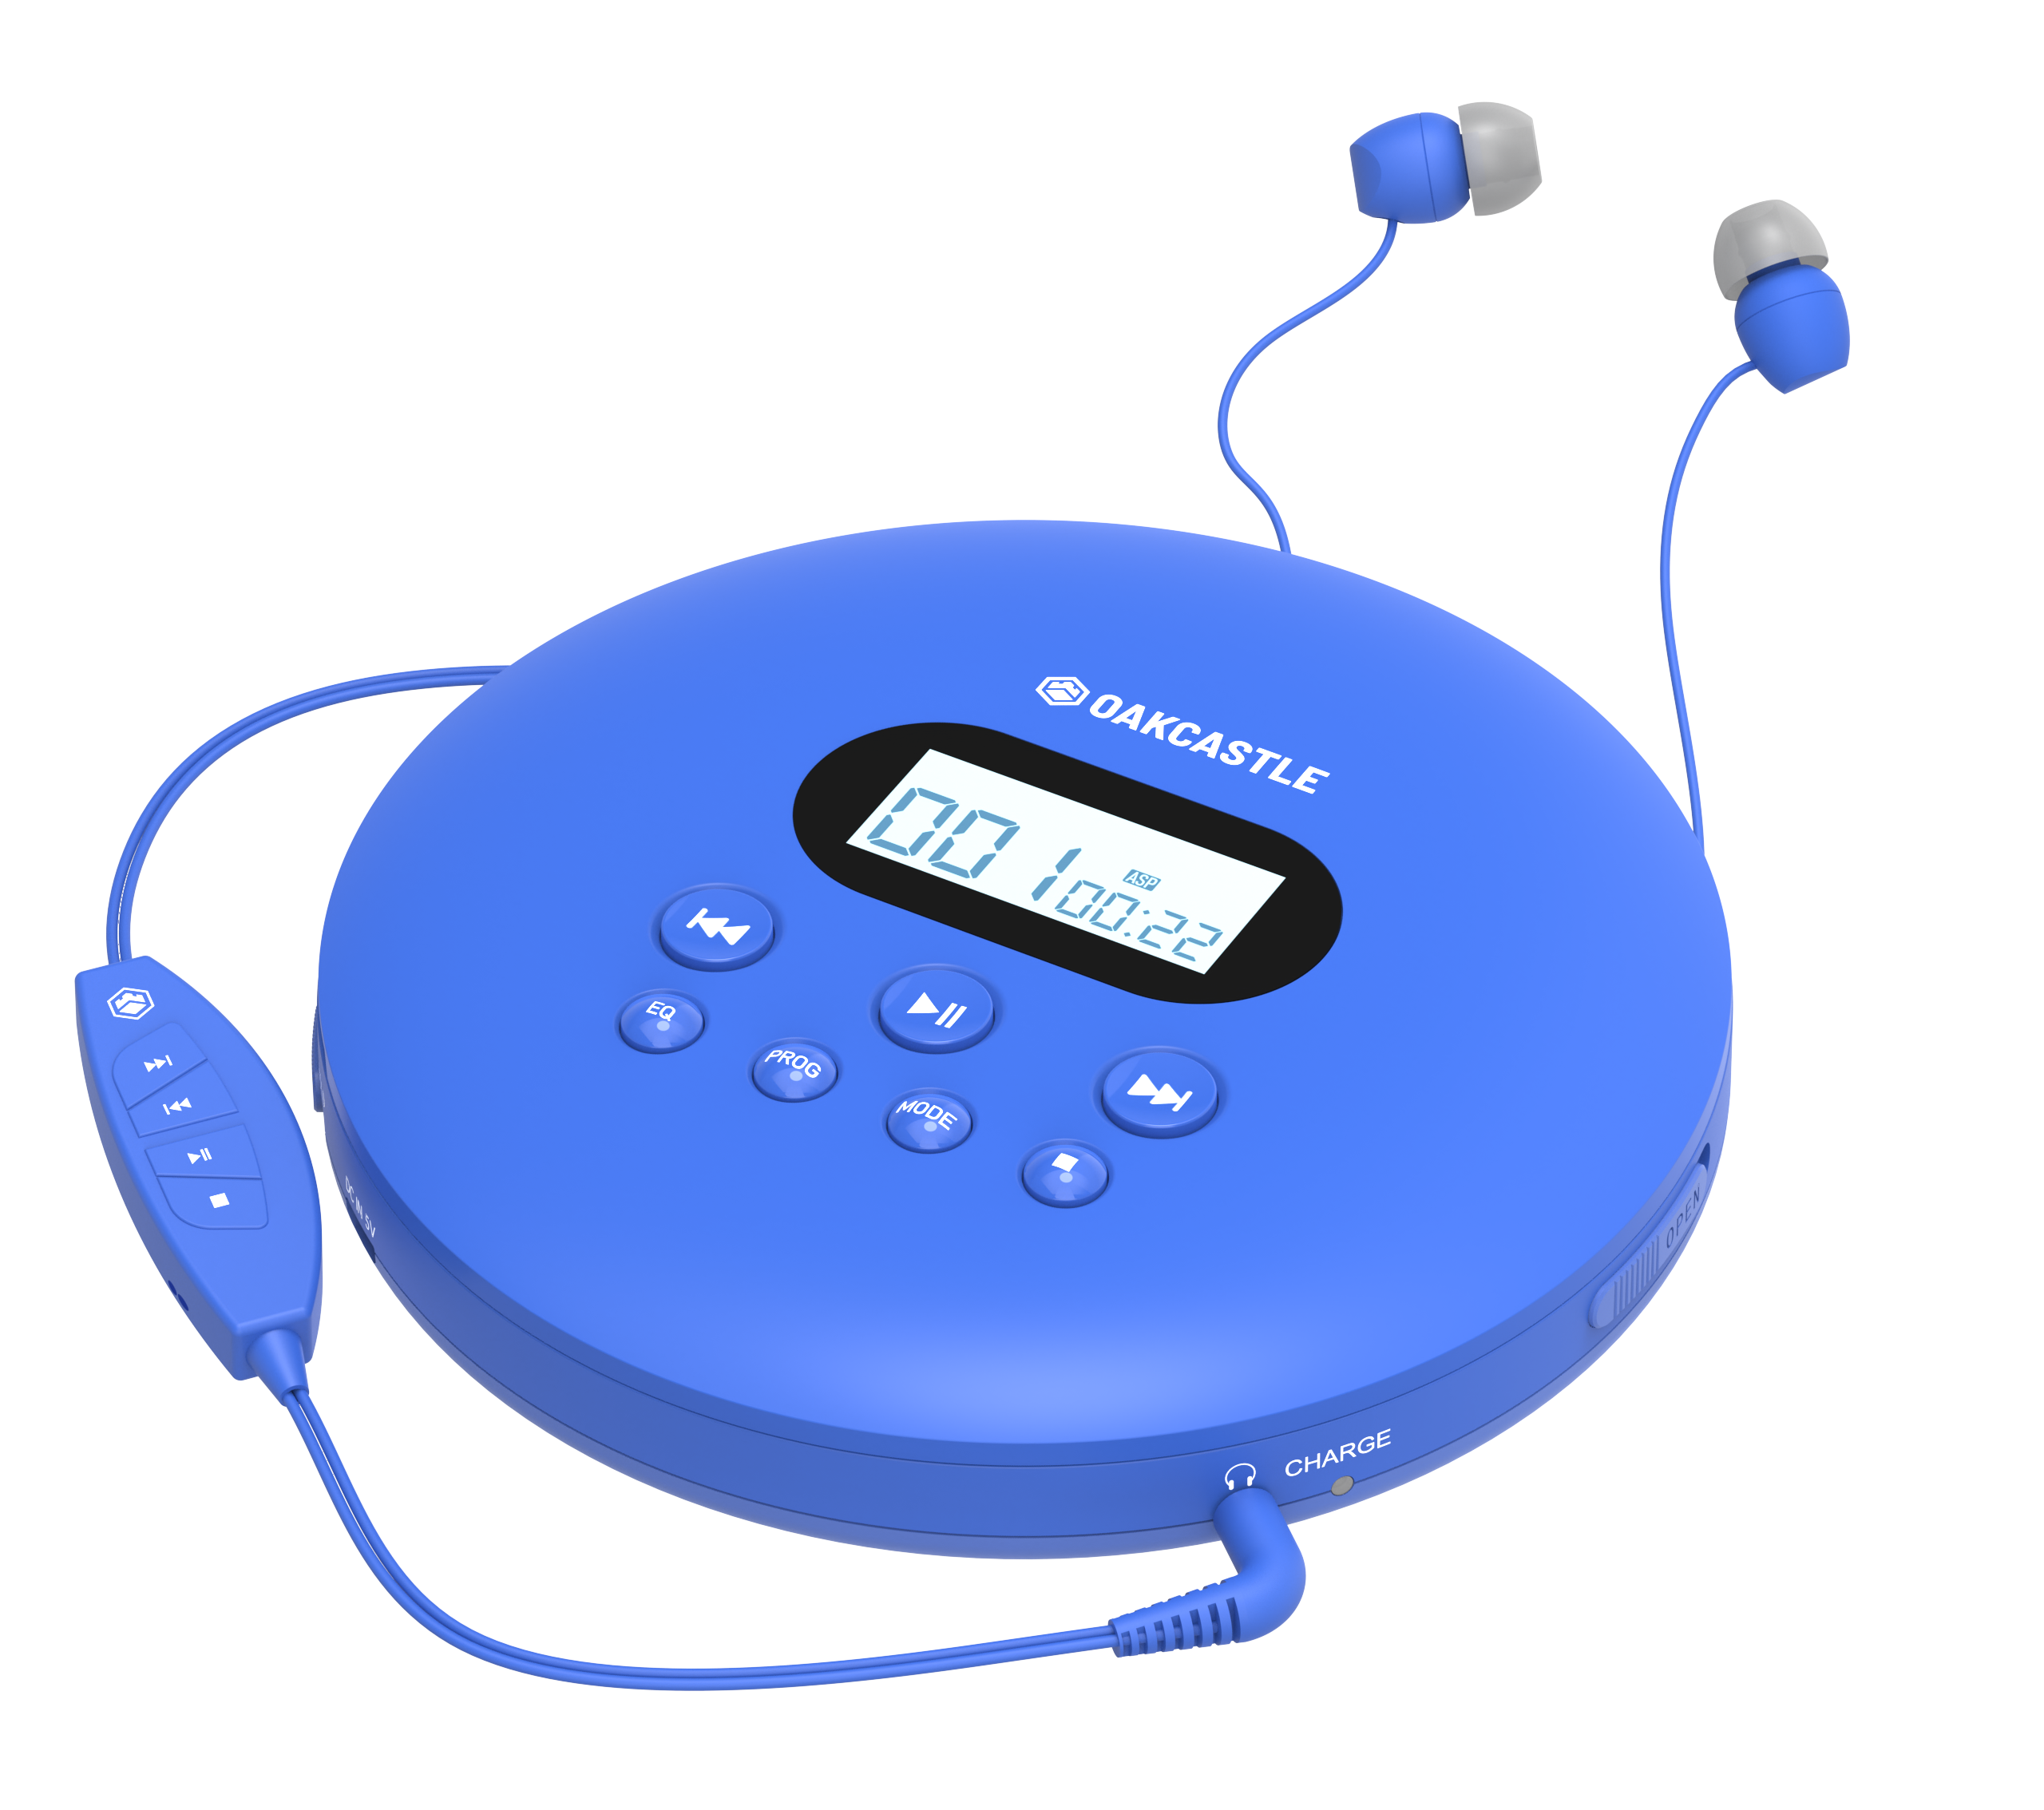 Majority Oakcastle CD100 Bluetooth Portable CD Player - Blue